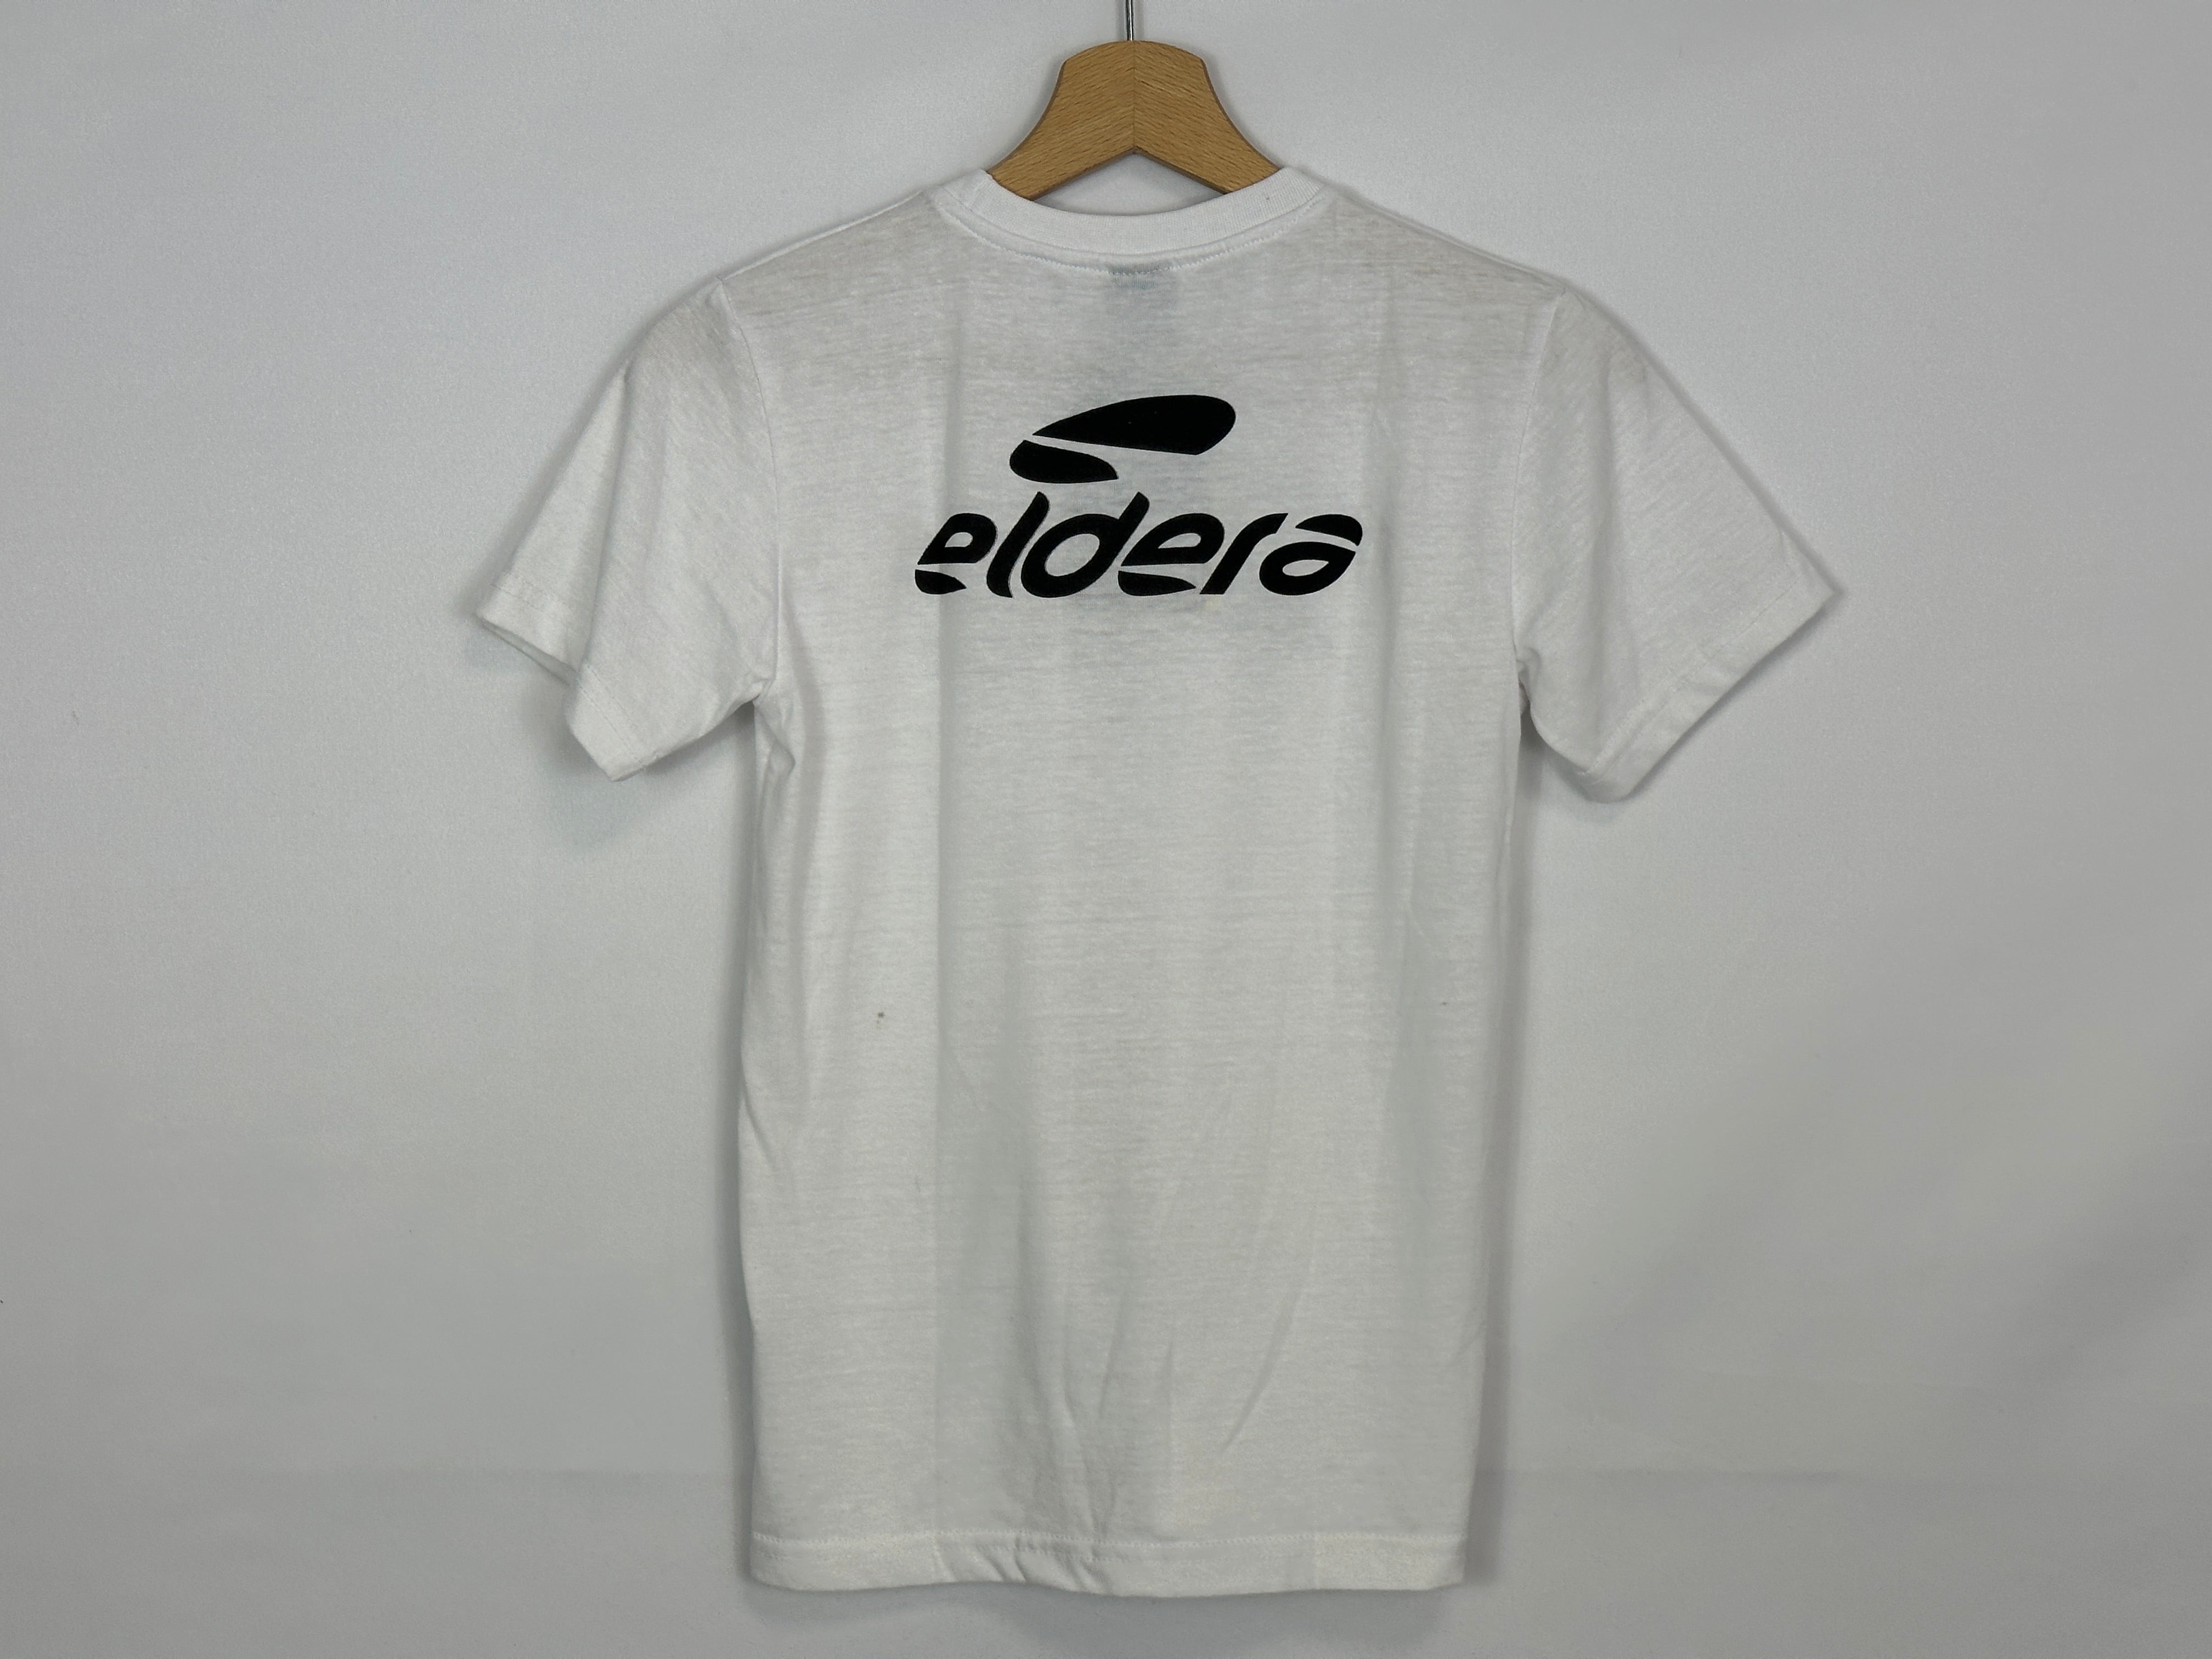 FDJ Cycling - T-Shirt von Eldera